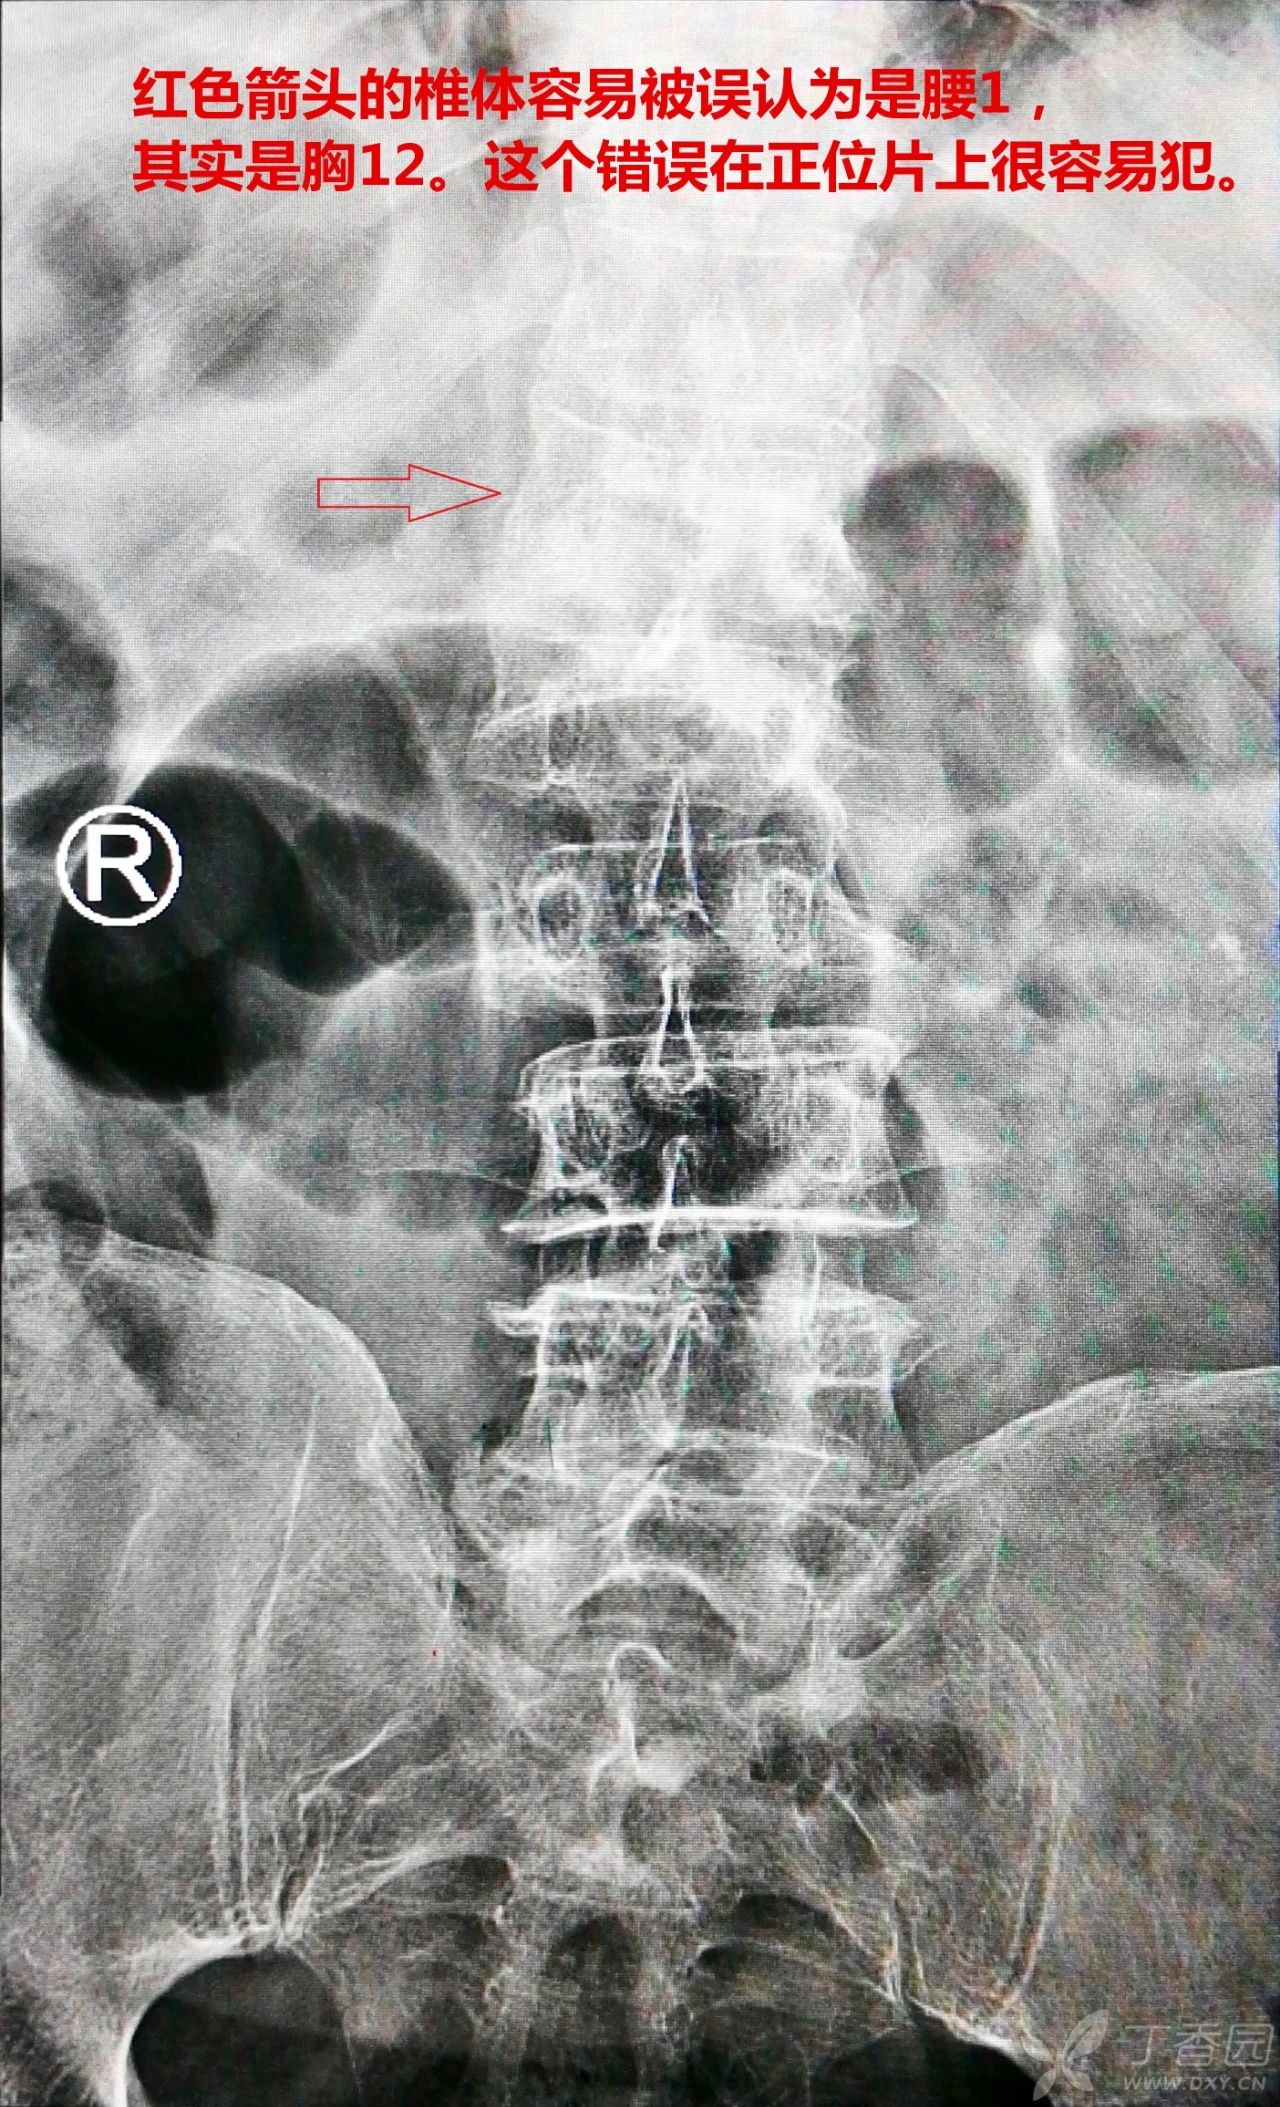 脊柱CT解剖 - 知乎